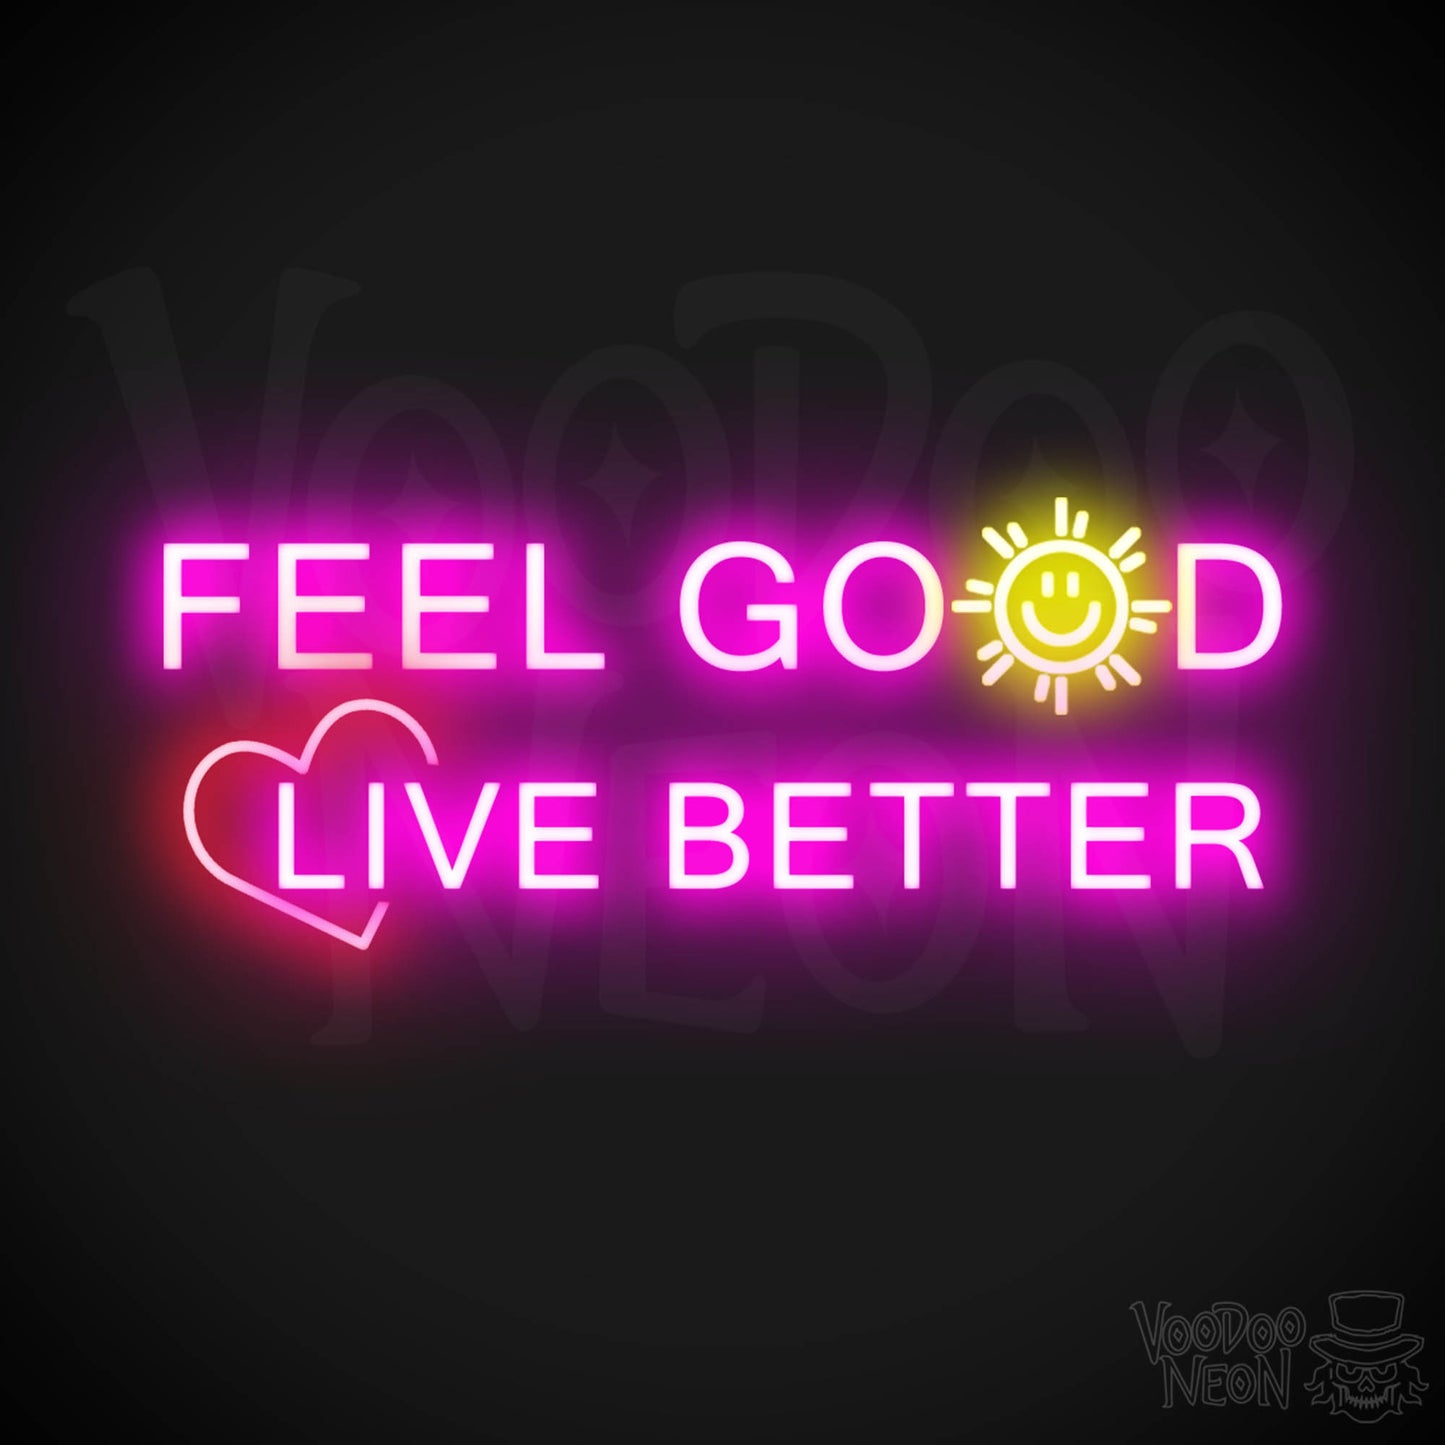 Feel Good Live Better Neon Sign - Feel Good Live Better Sign - Color Multi-Color